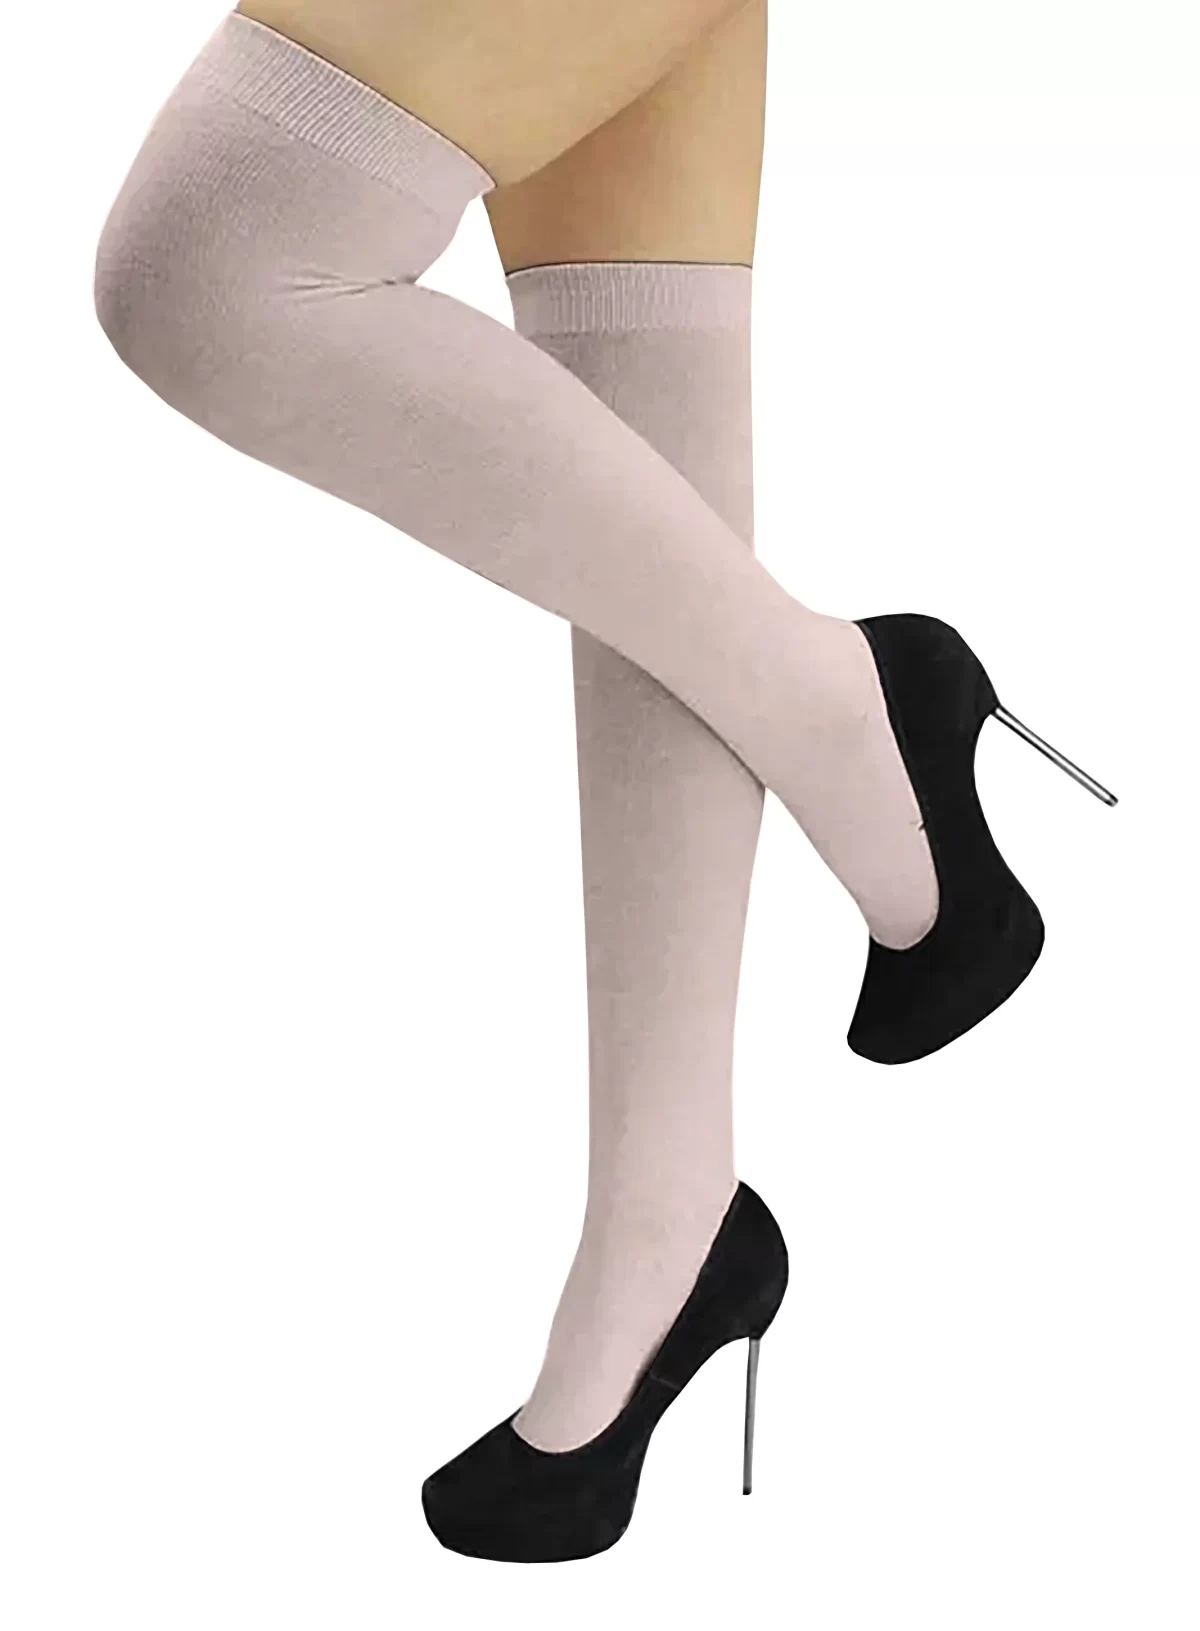 Skin Girls and Women's Thigh High Stocking/Socks ( Free Size )2